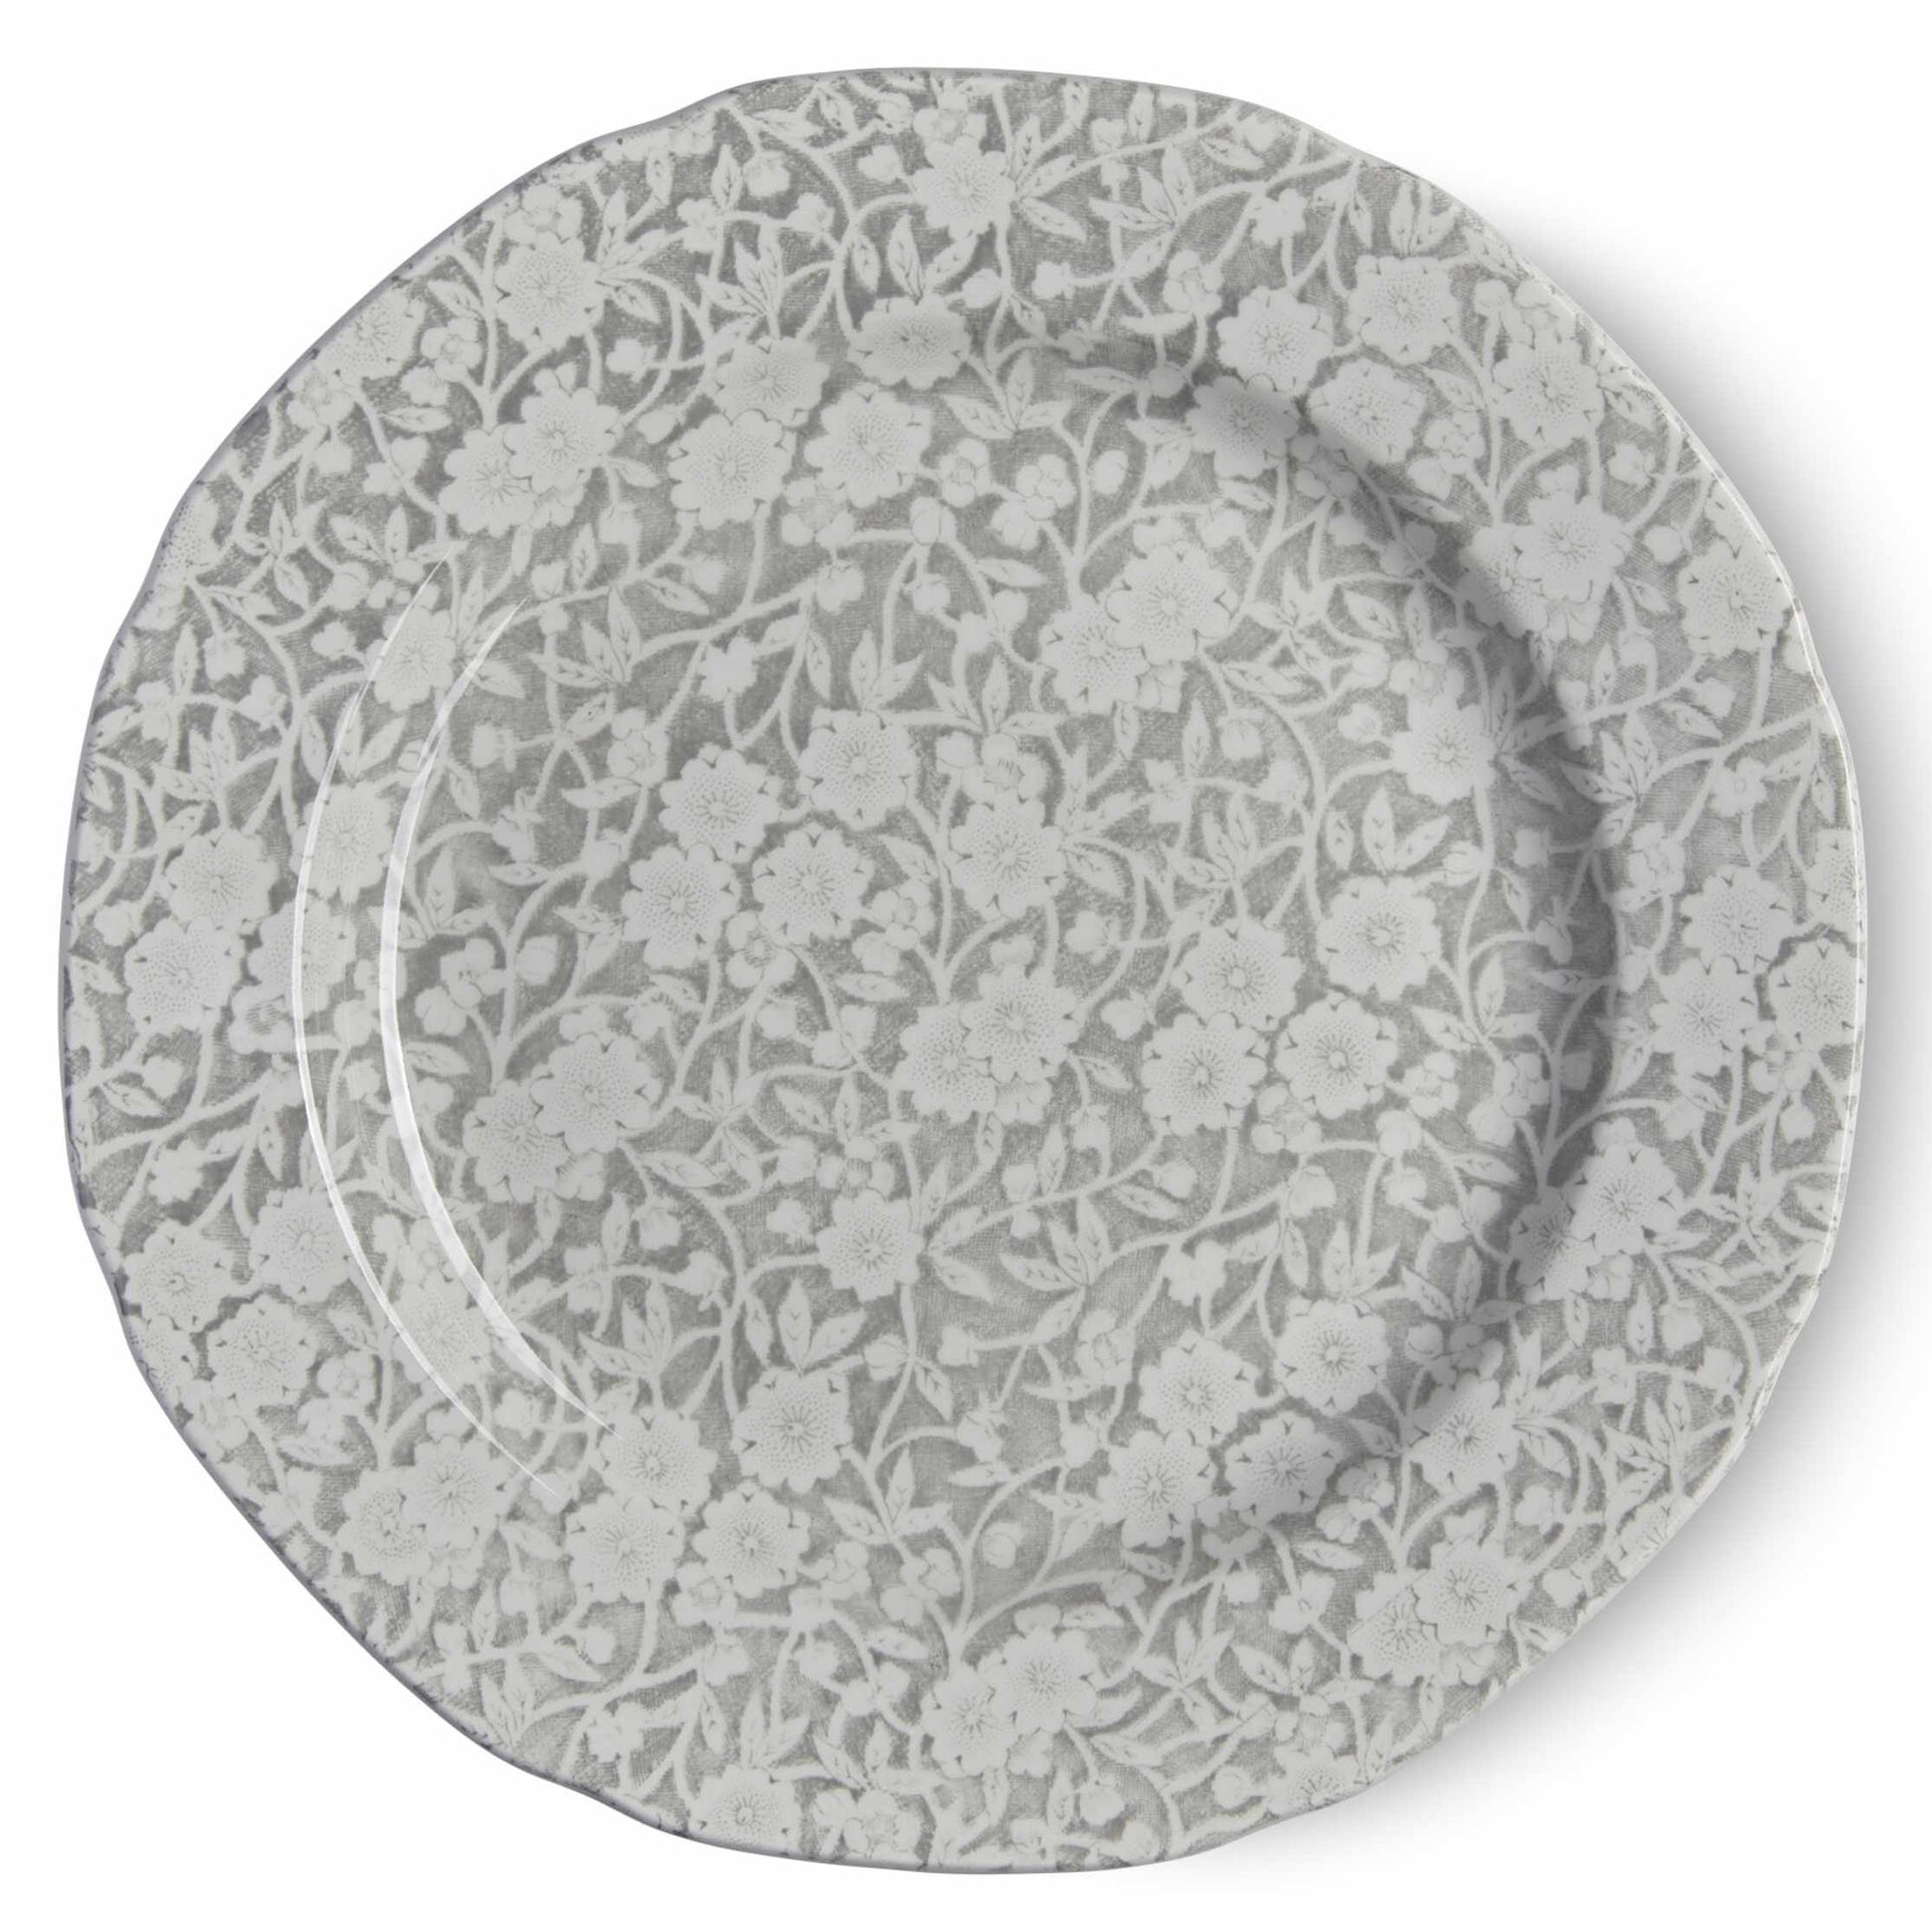 Dove Grey Calico Plate 21.5cm / 8.5" Seconds